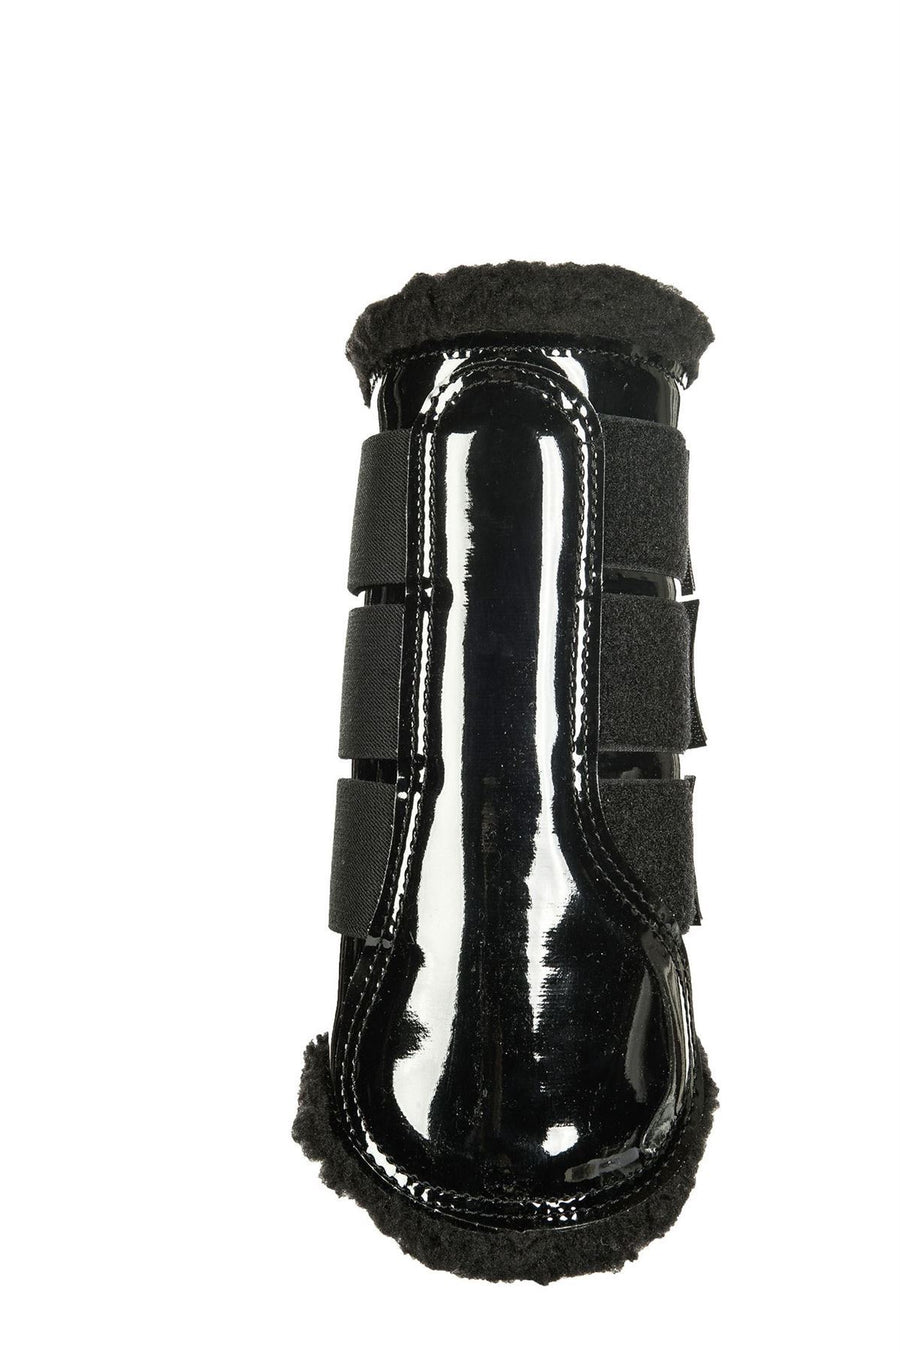 HKM 4189 Brushing Boots Black/Black